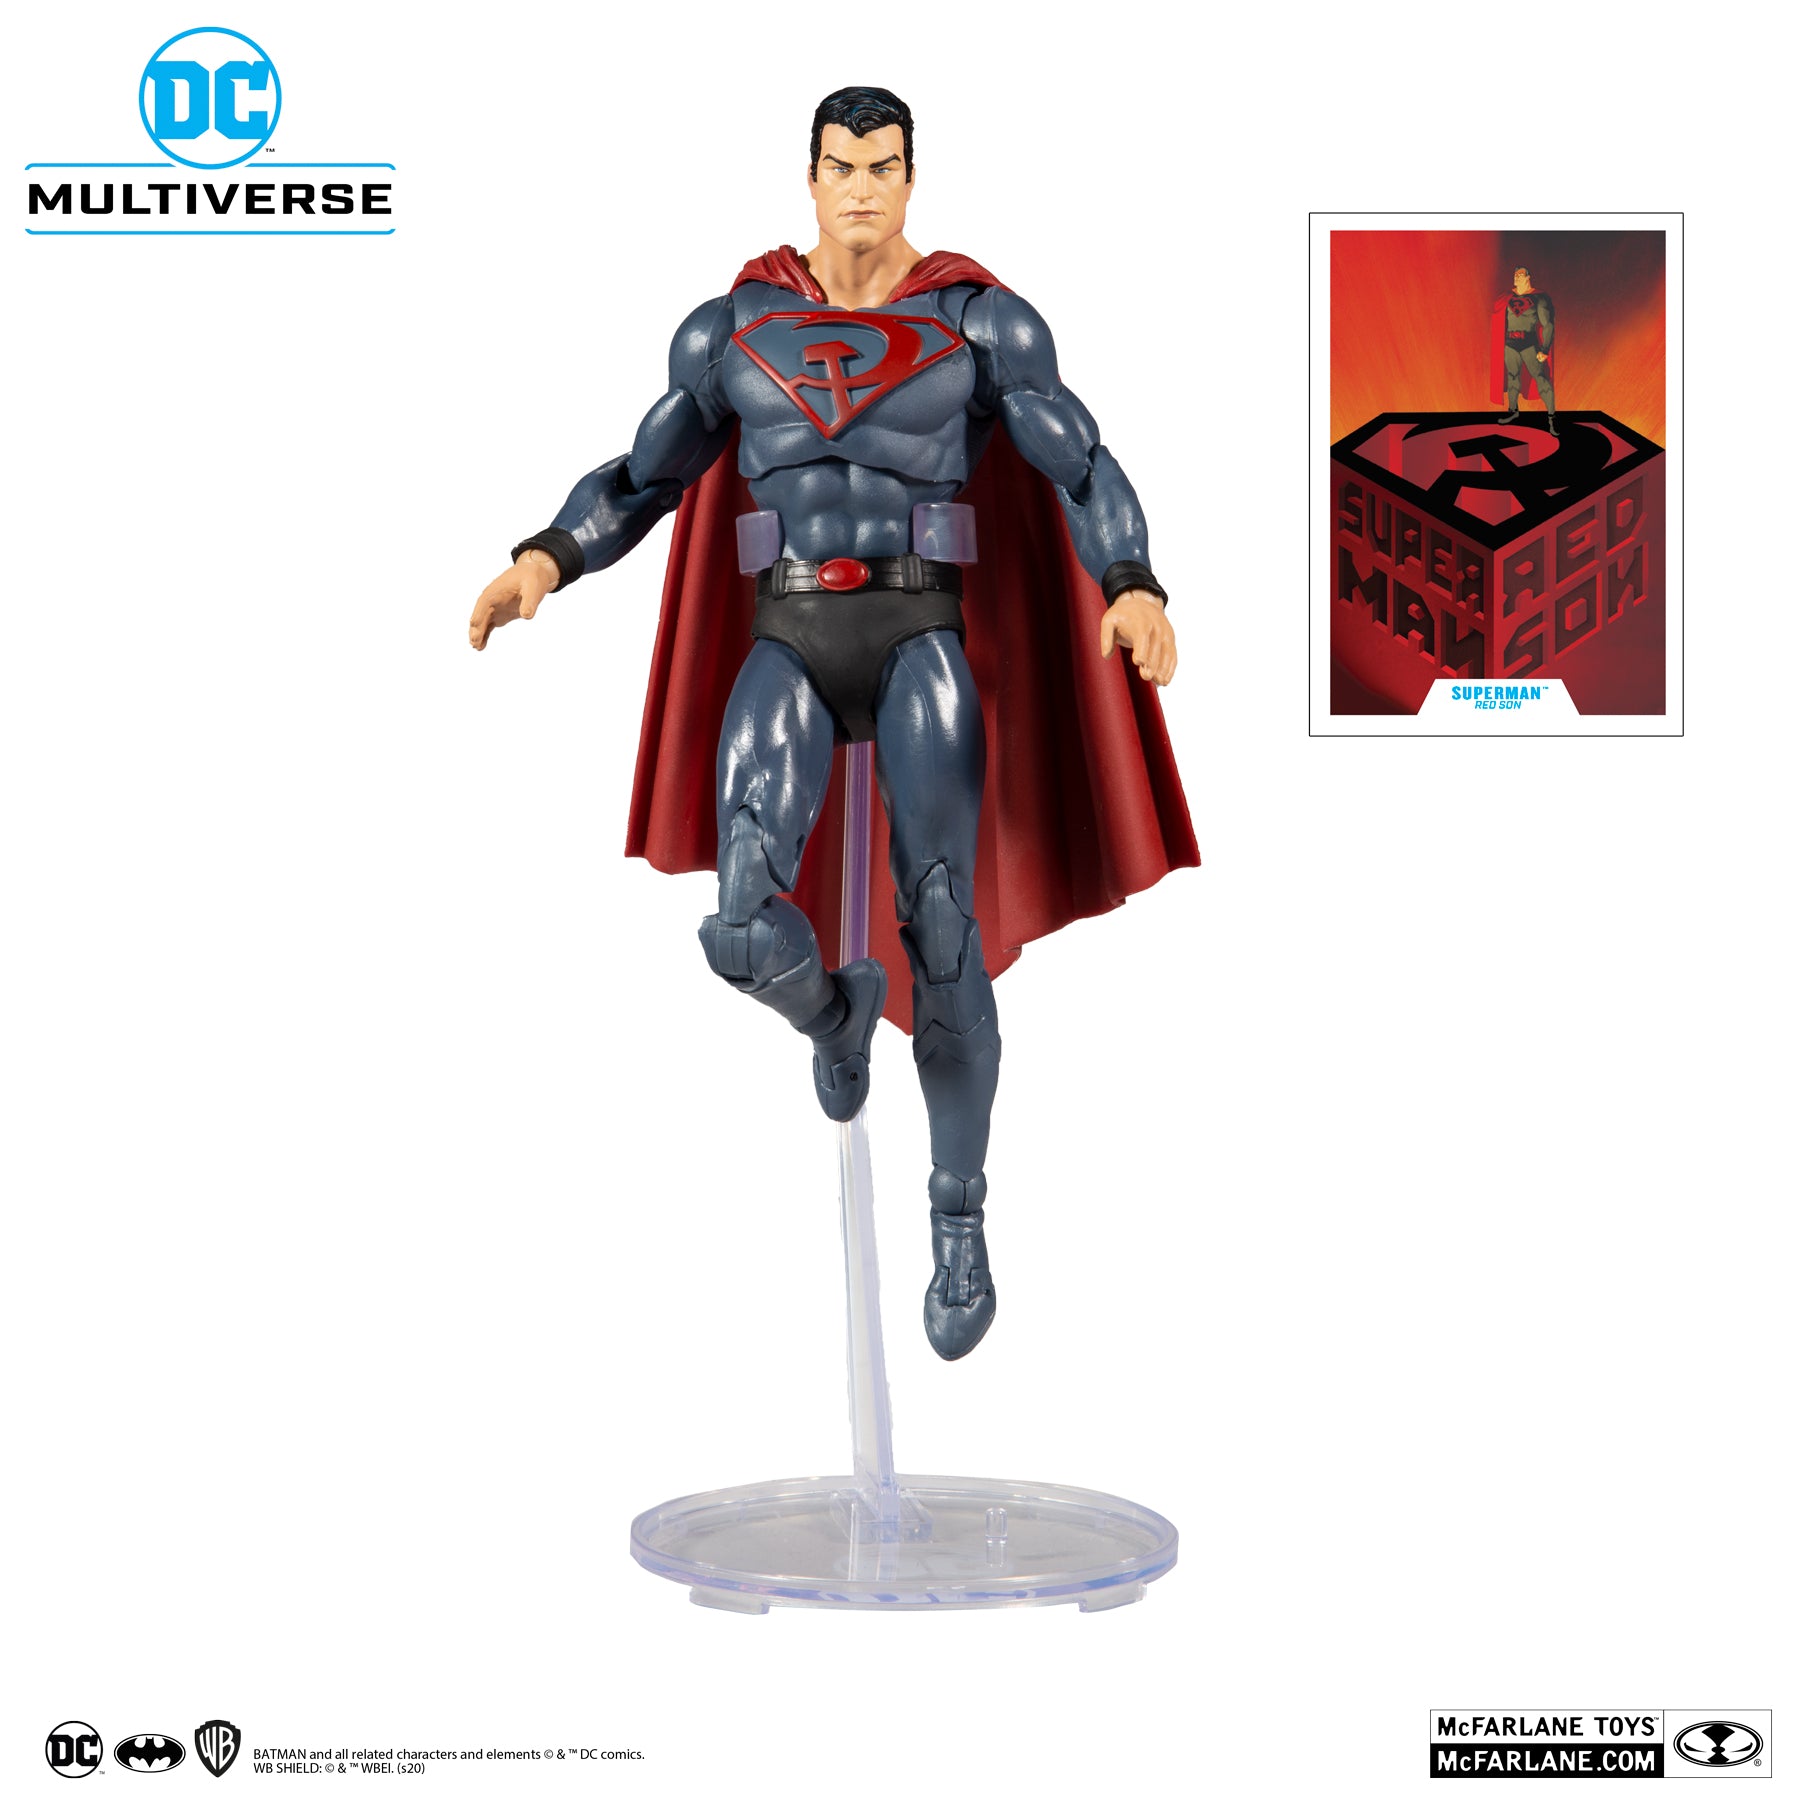 DC Multiverse Superman Red Son - McFarlane Toys